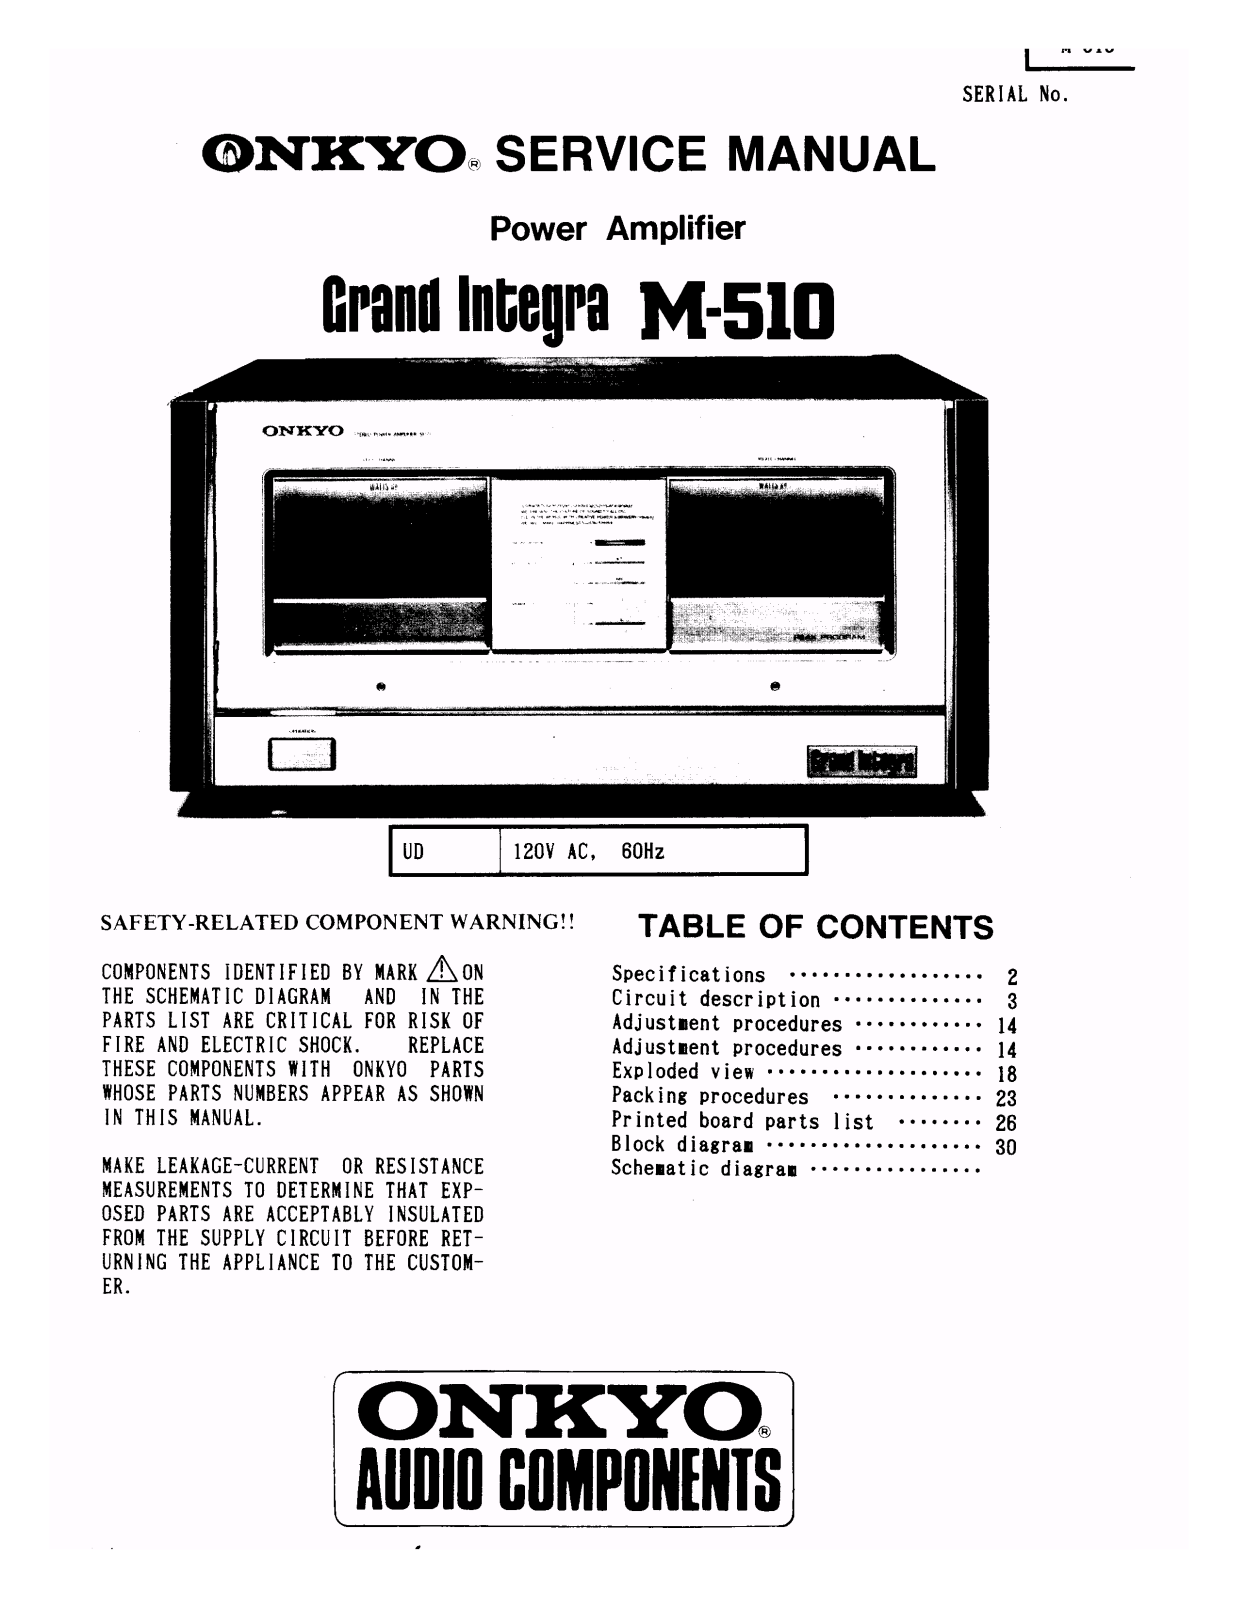 Onkyo Grand Integra M-510, M-510 Service manual